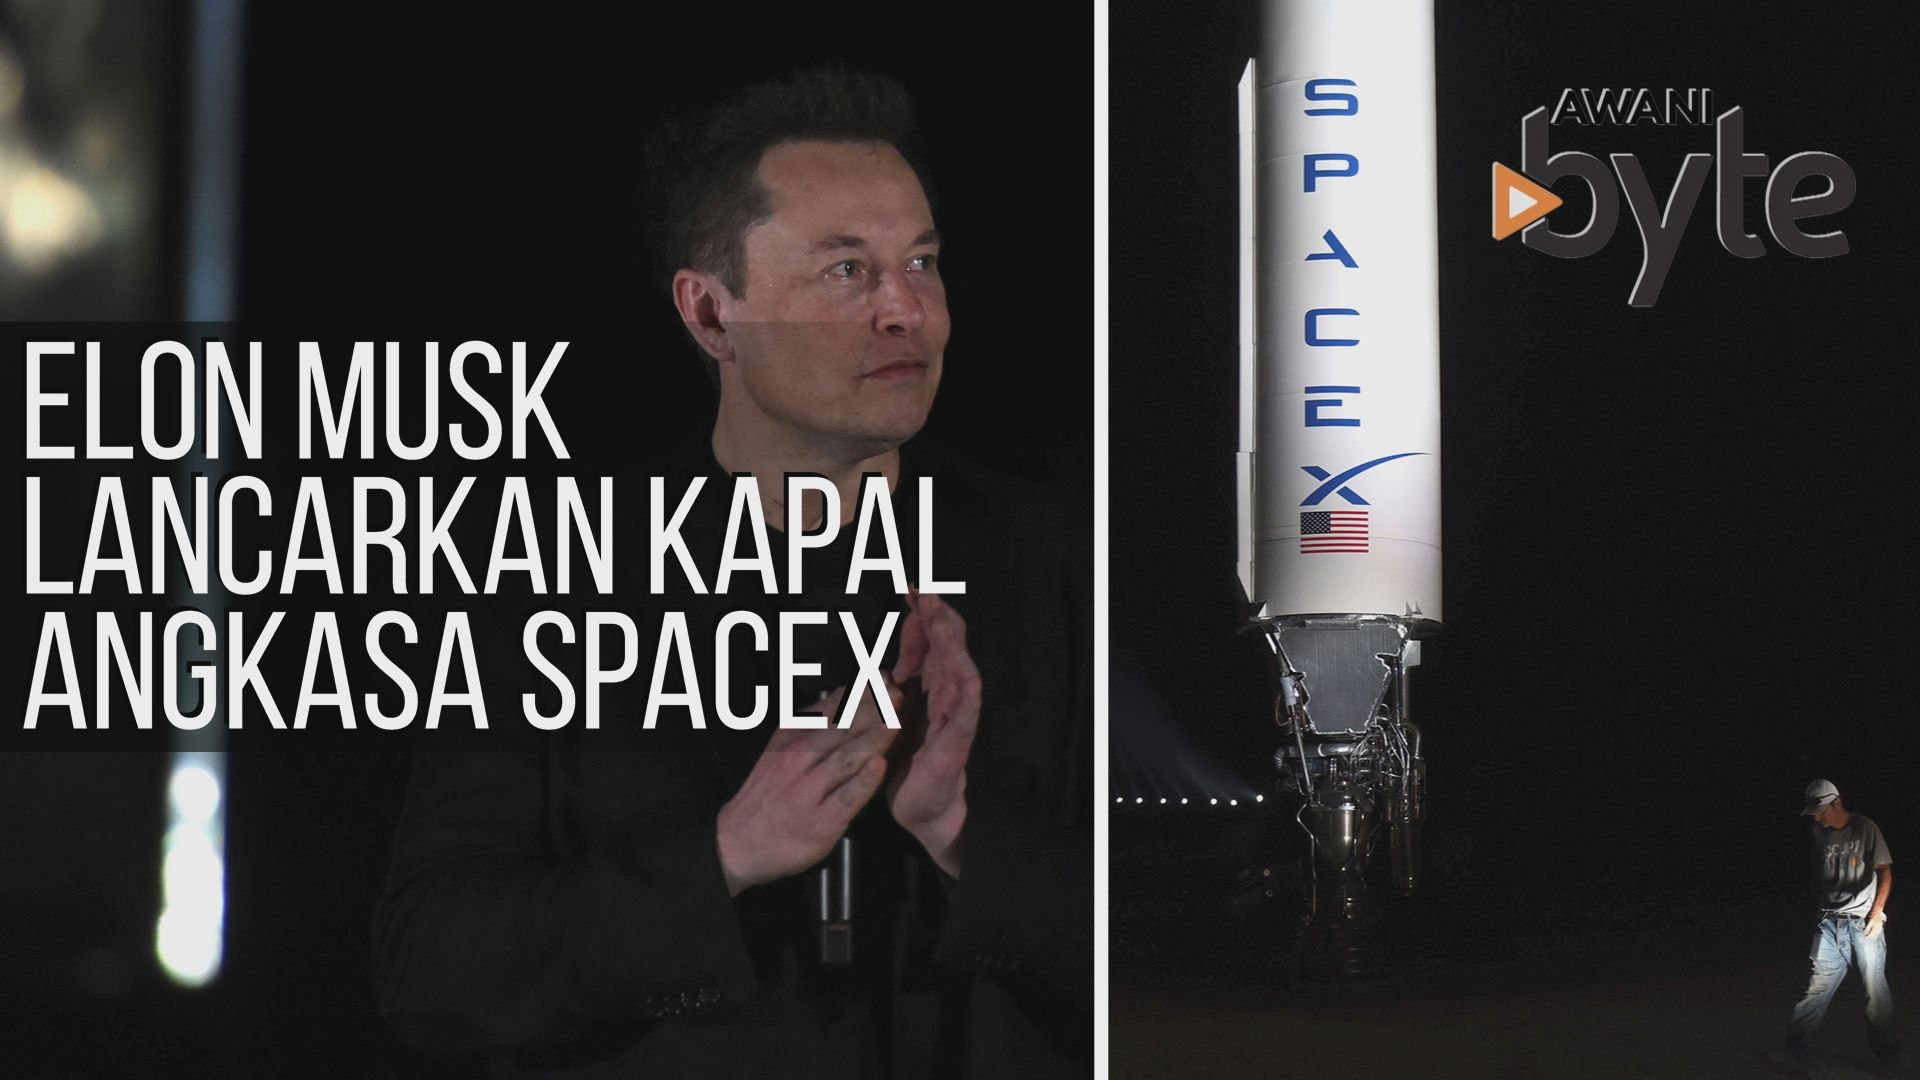 #AWANIByte: Elon Musk lancarkan kapal angkasa SpaceX